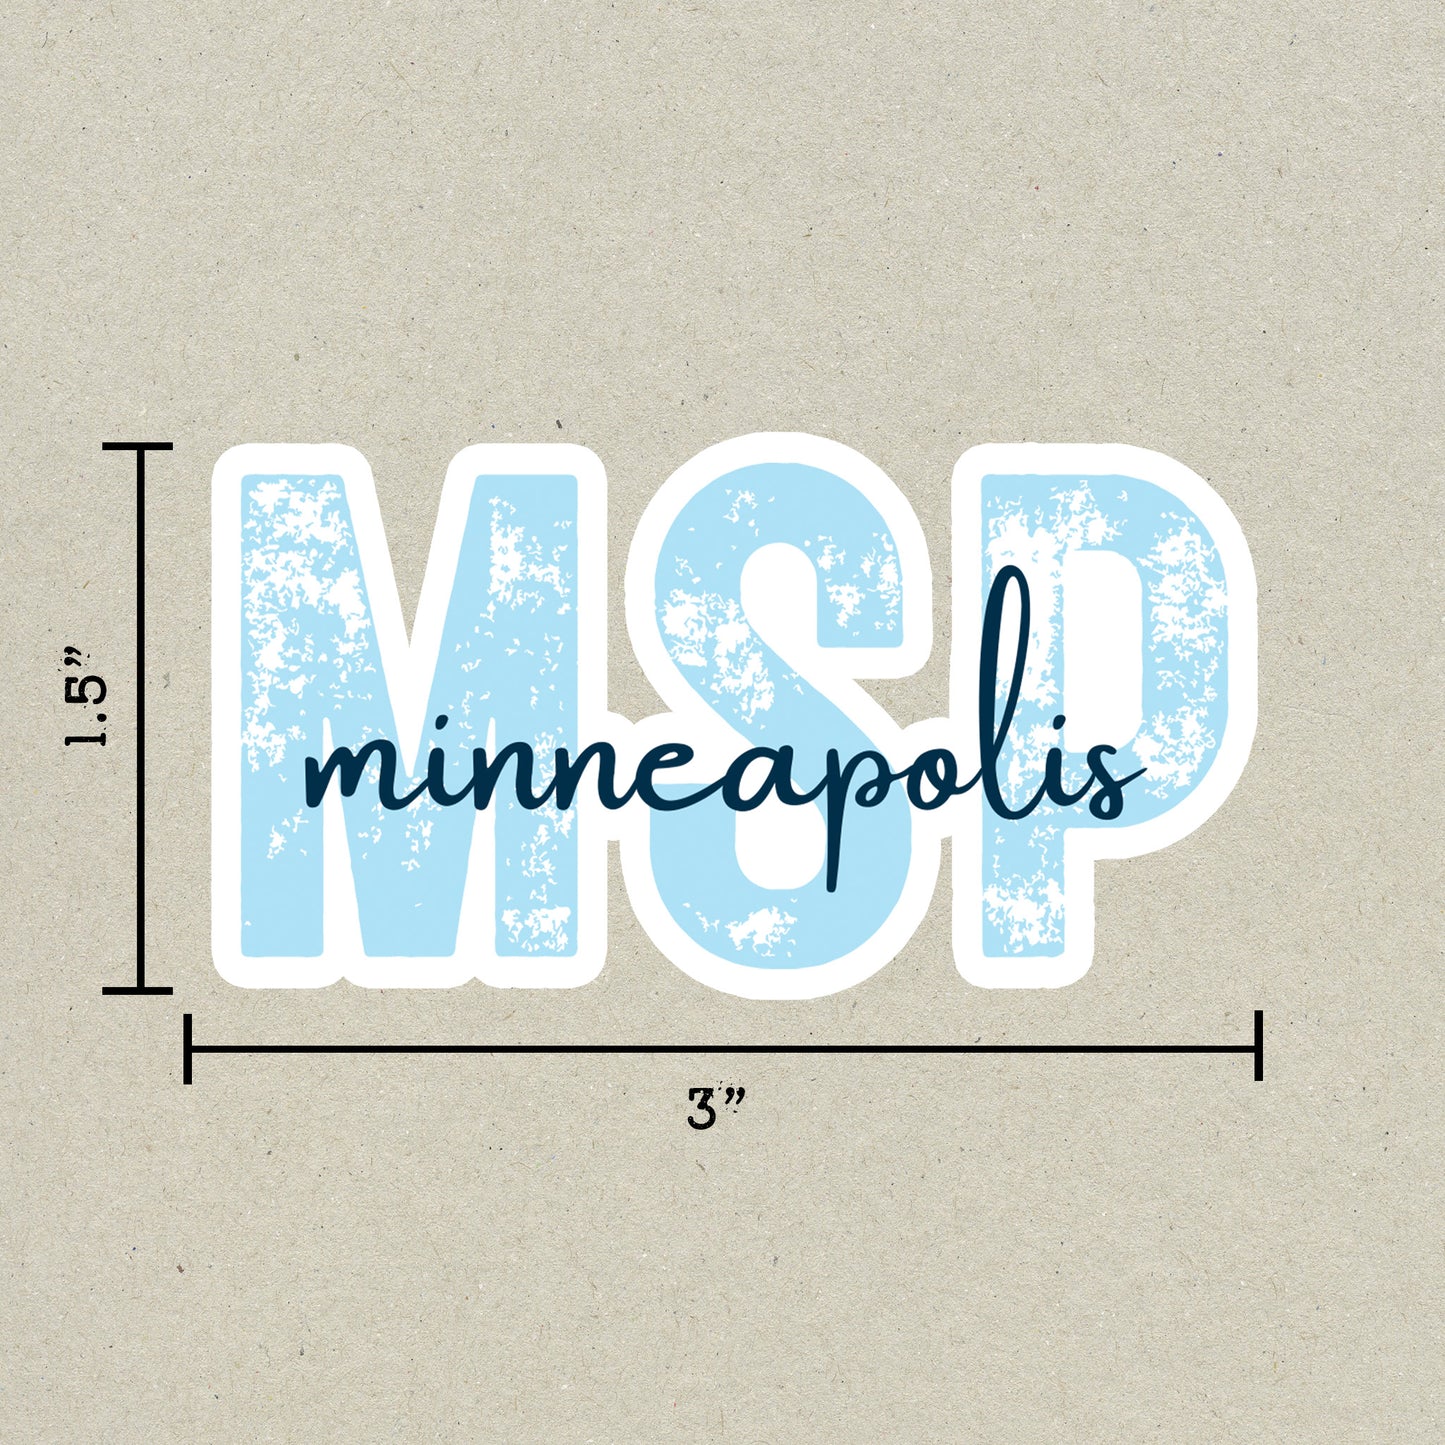 MSP Minneapolis Airport Code Sticker